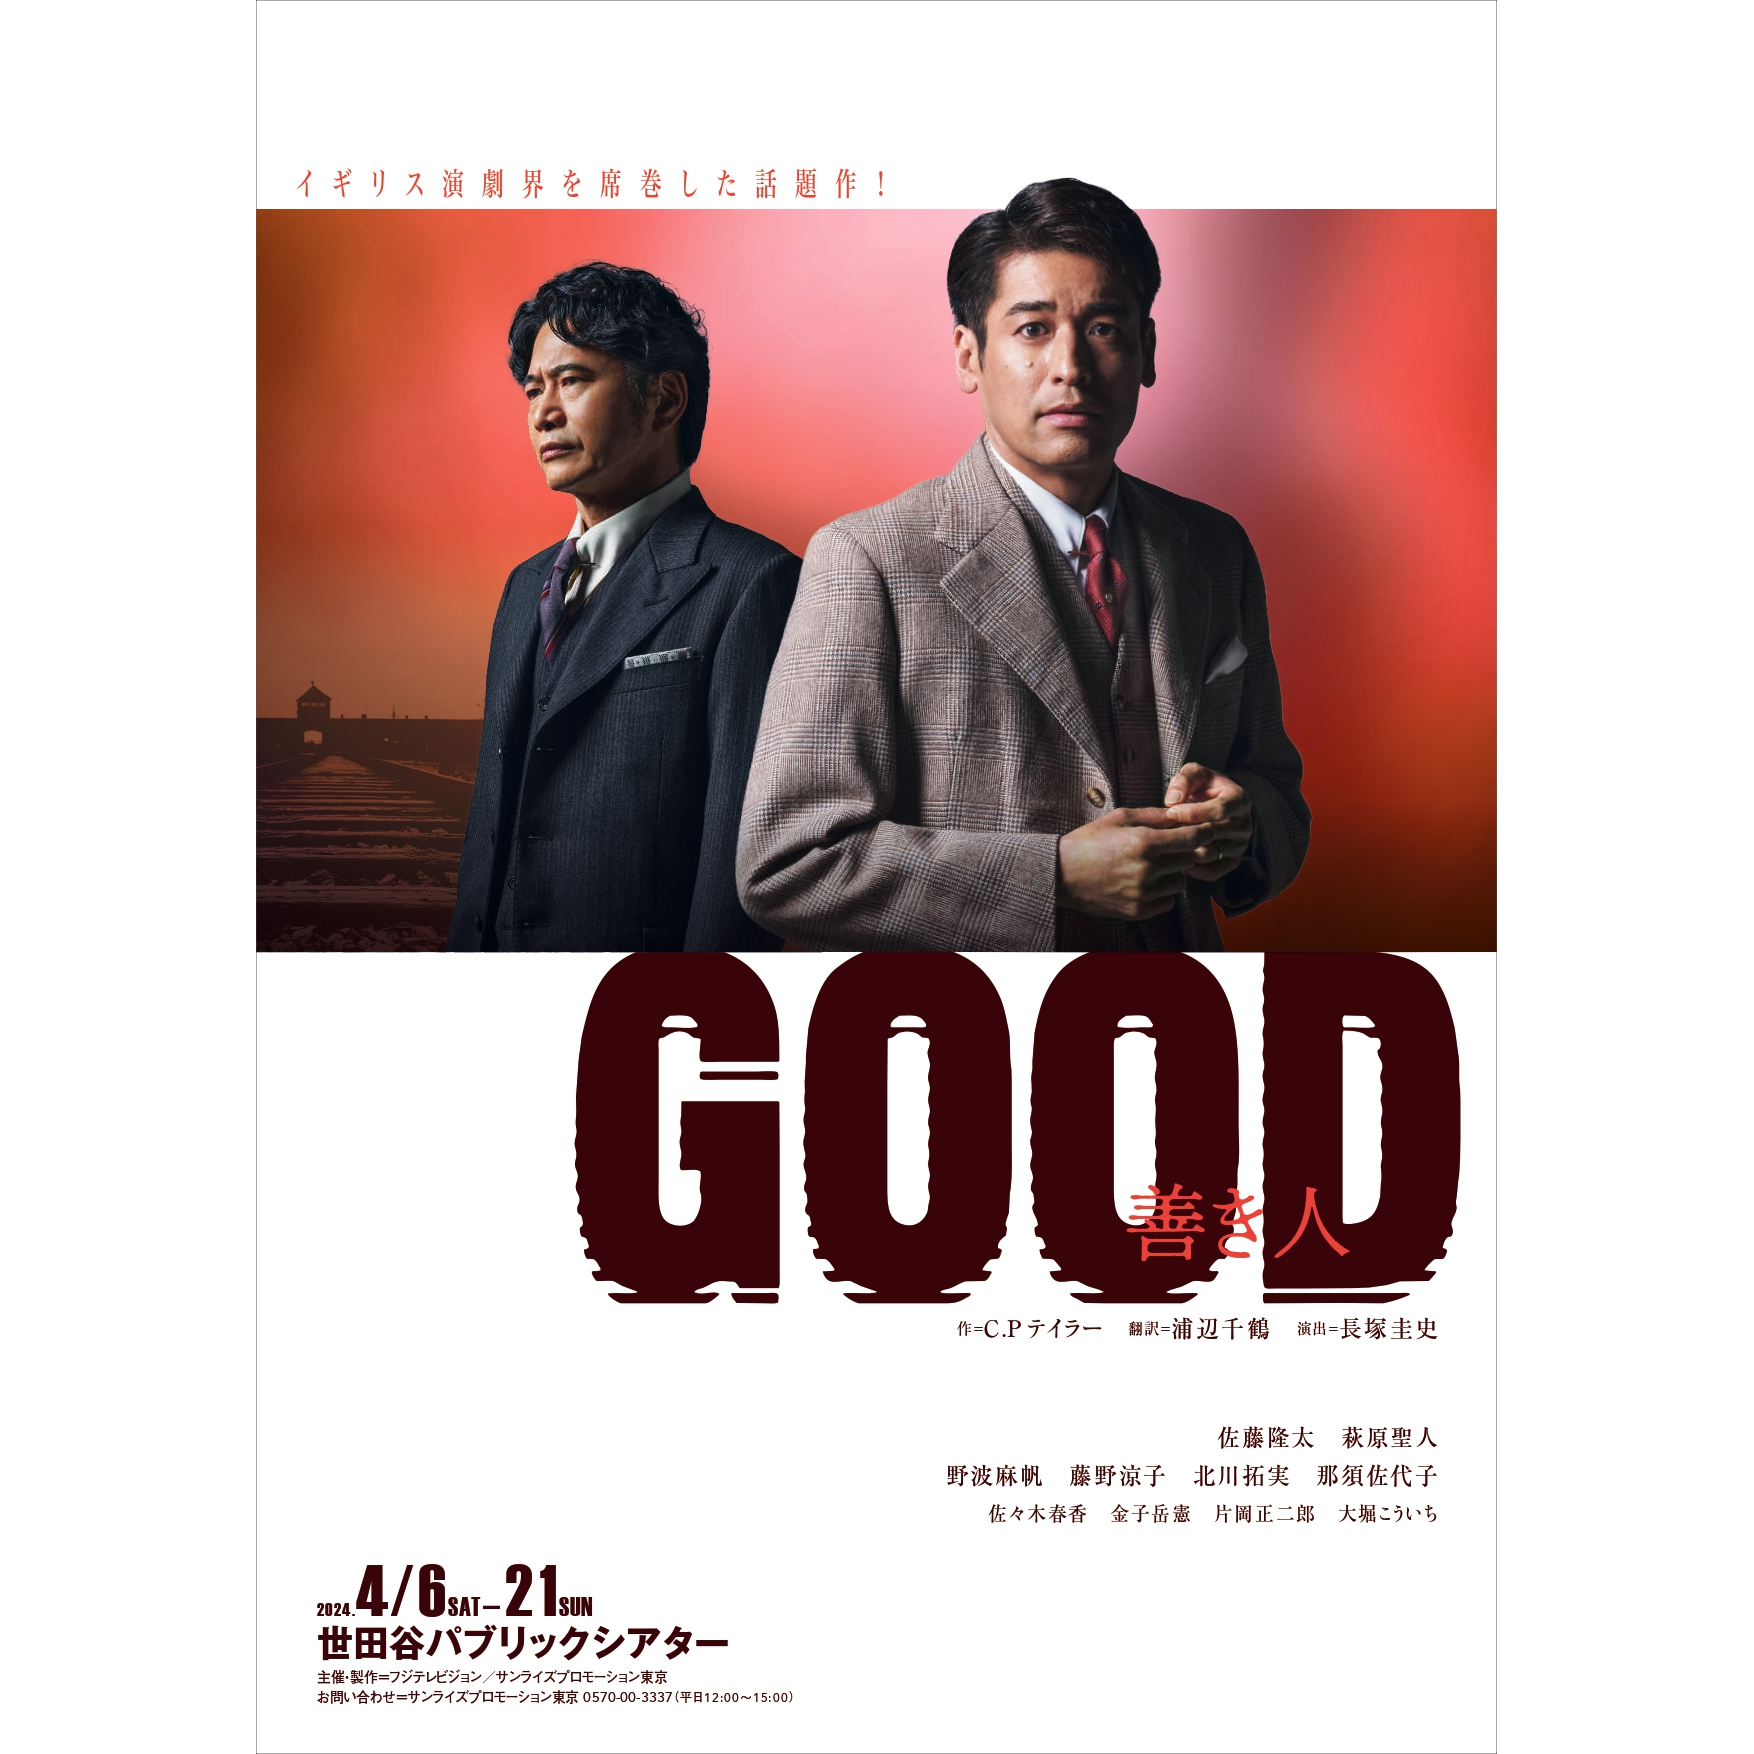 『GOOD』 -Good person-